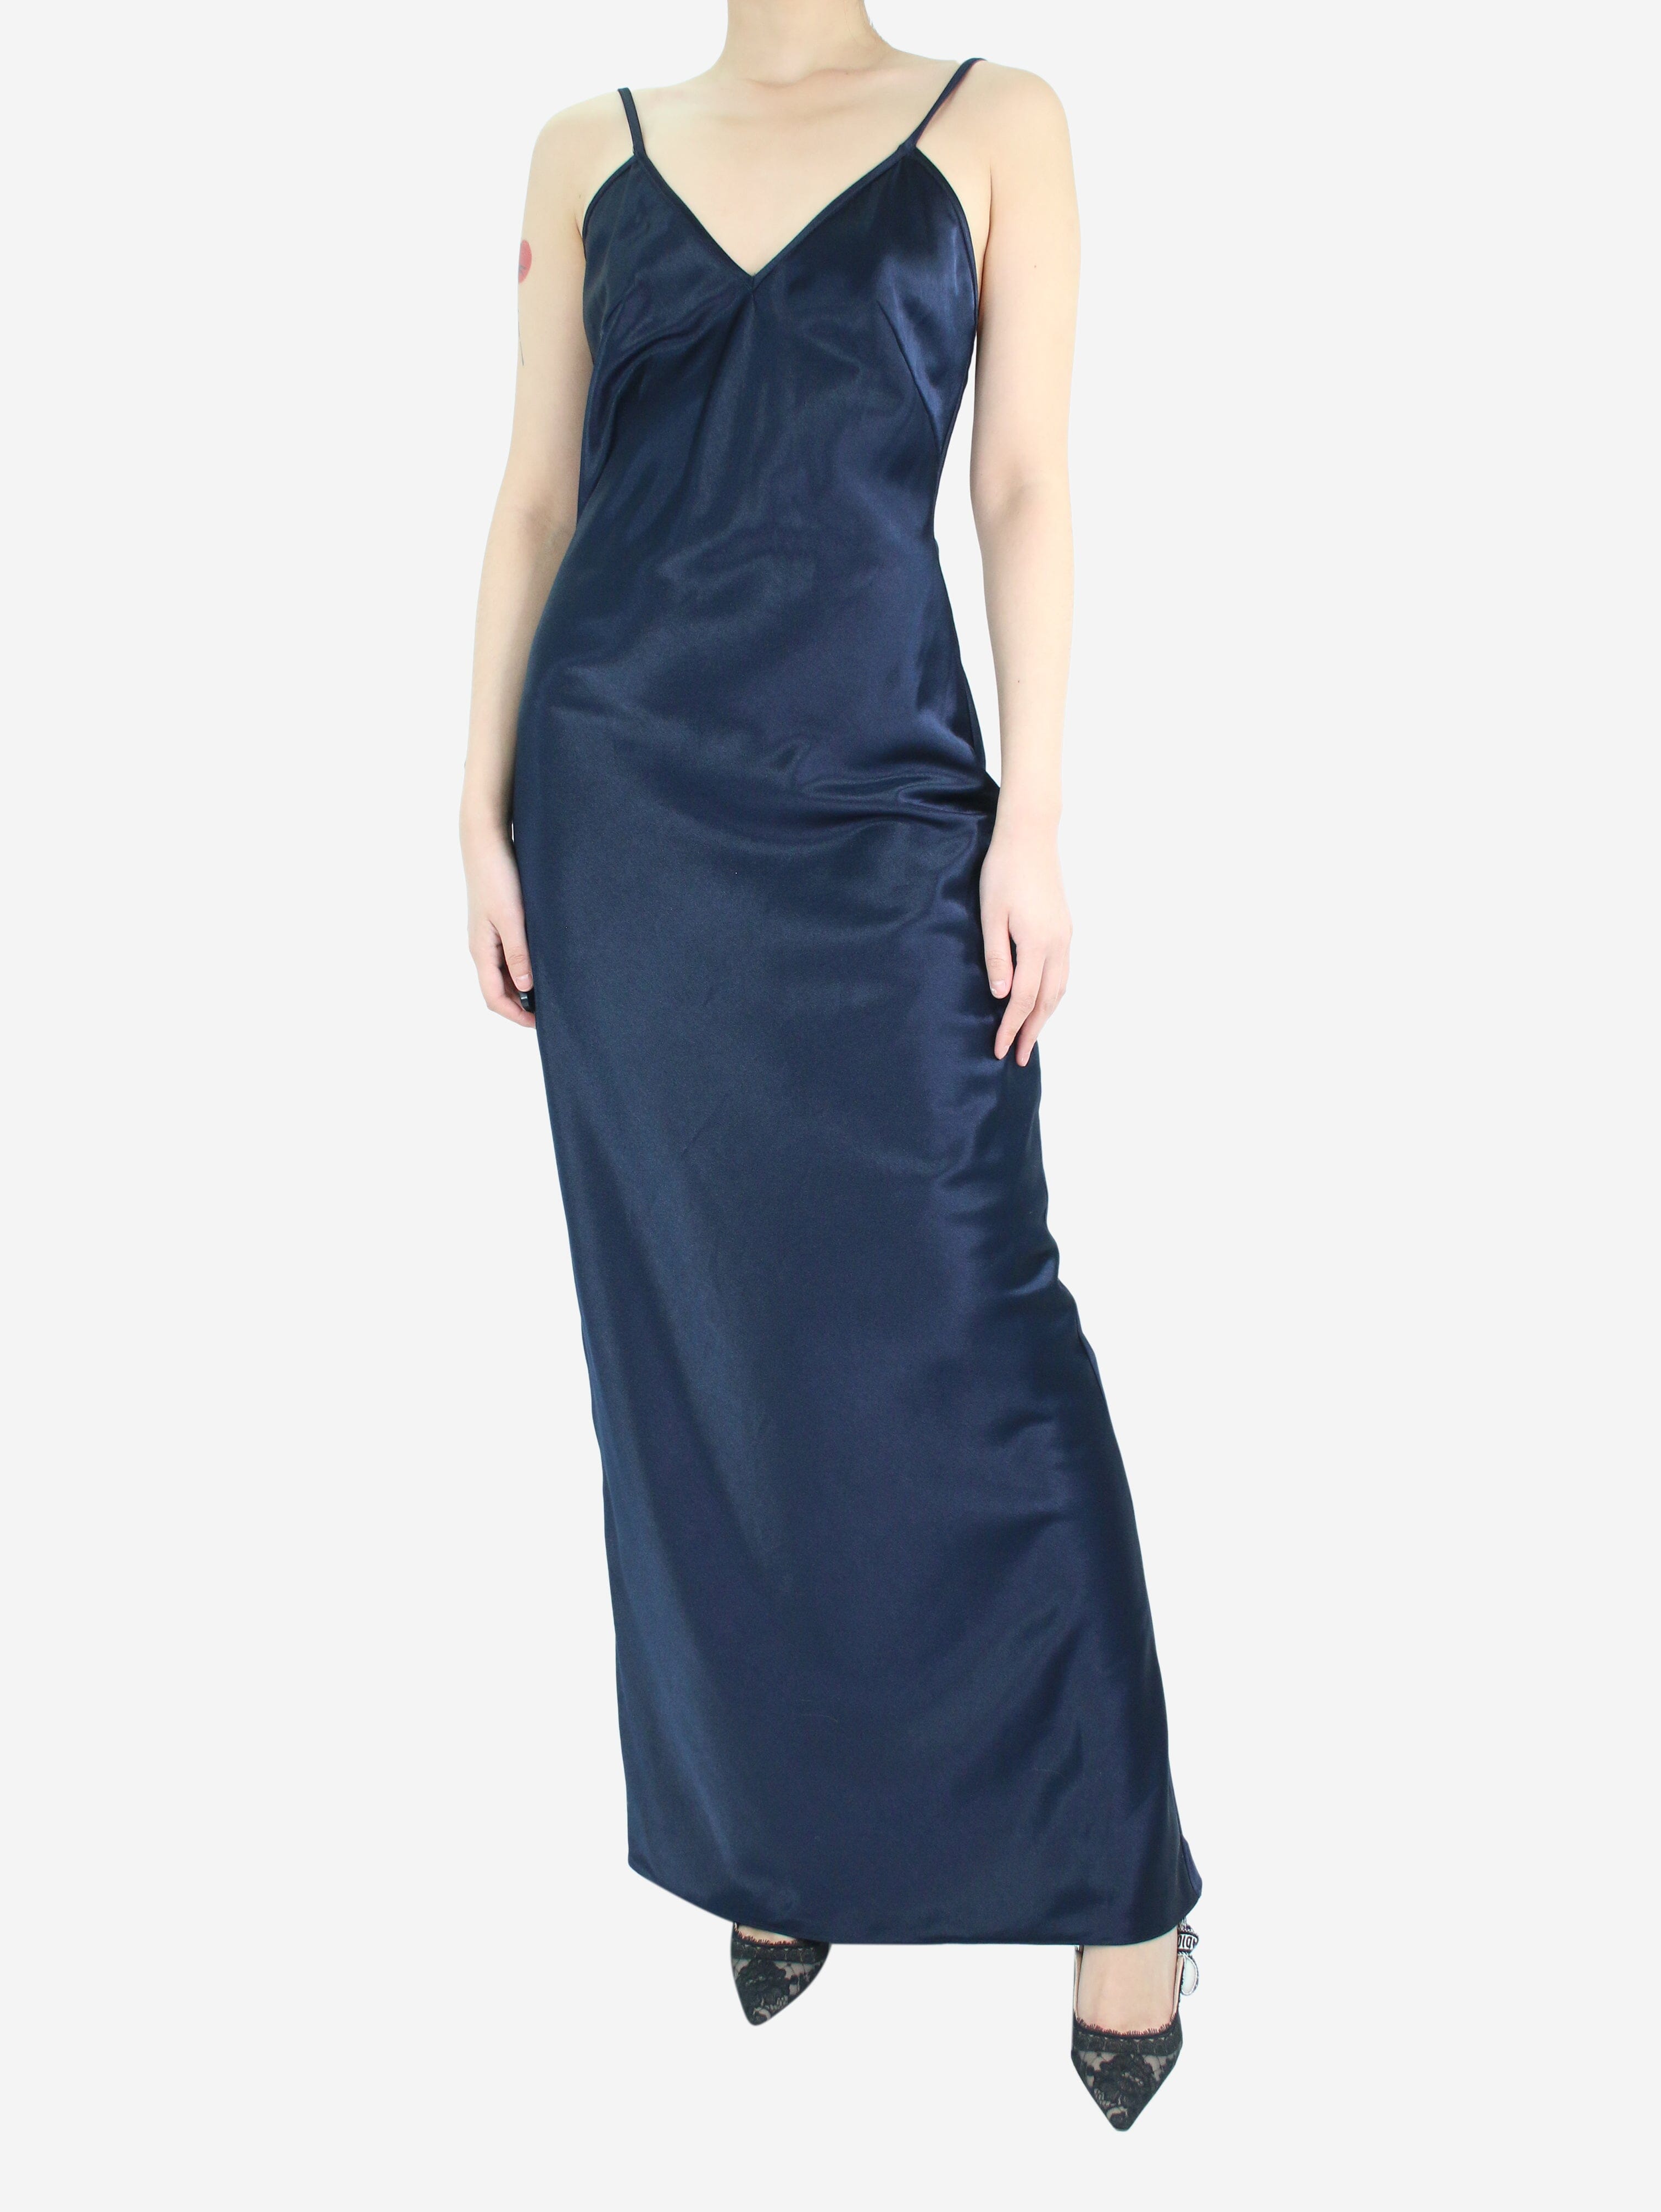 Blue sleeveless satin maxi dress - size M